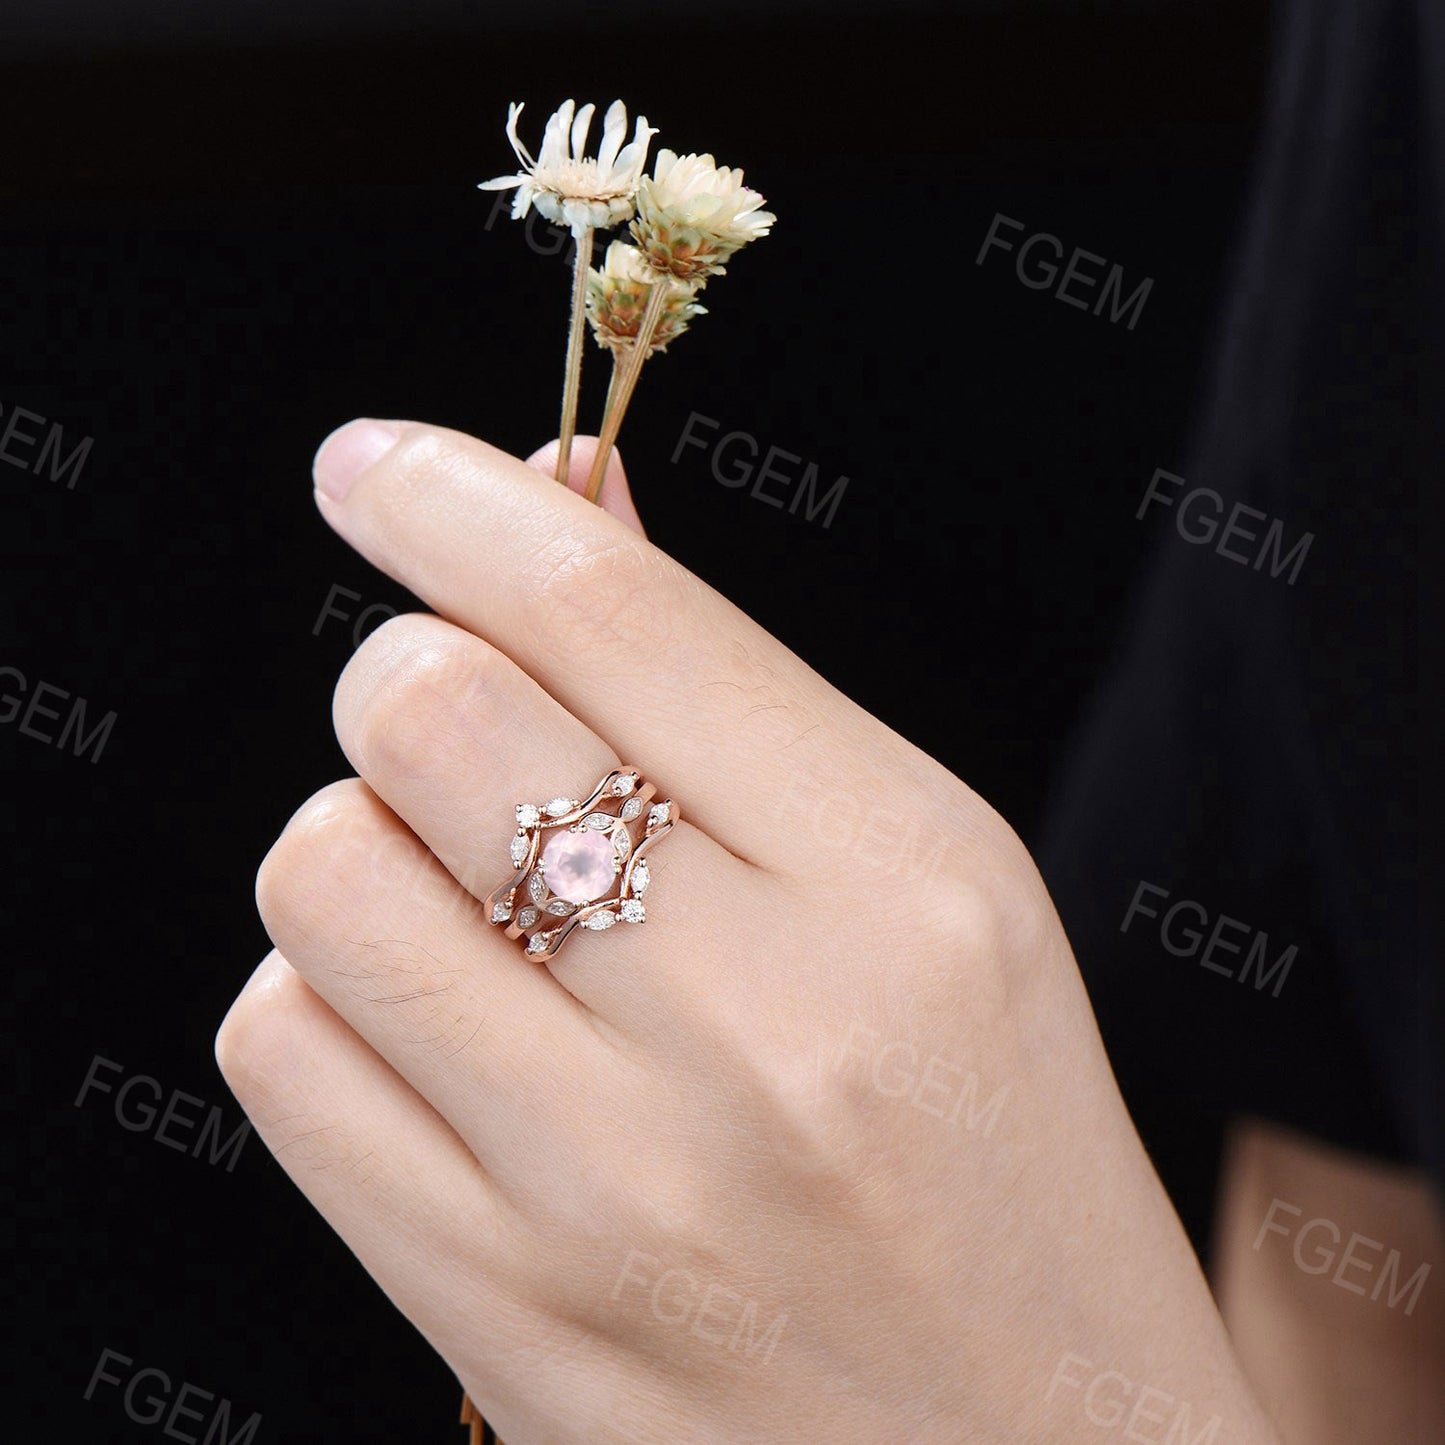 Natural Rose Quartz Engagement Ring Set Moissanite Cluster Bridal Set Rose Gold Enhancer Guard Wedding Ring Pink Crystal Ring Proposal Gift